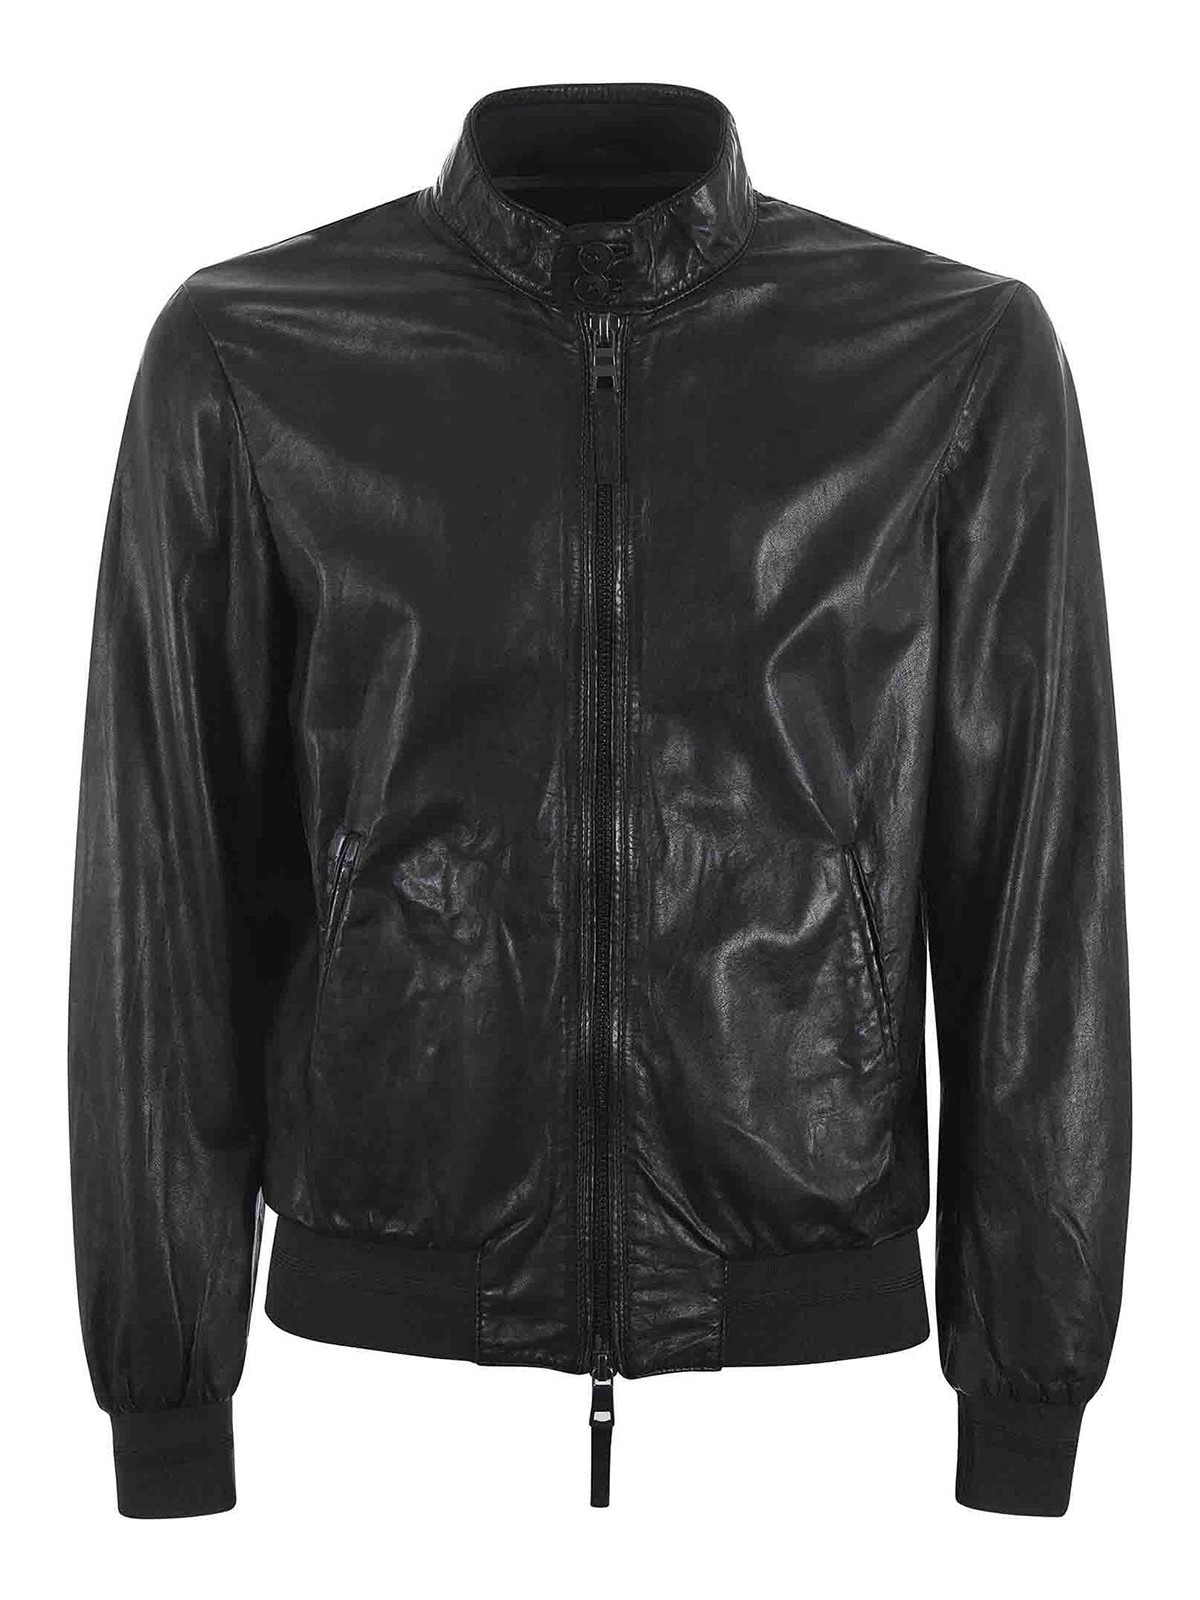 Shop The Jack Leathers Jacket In Dark Brown